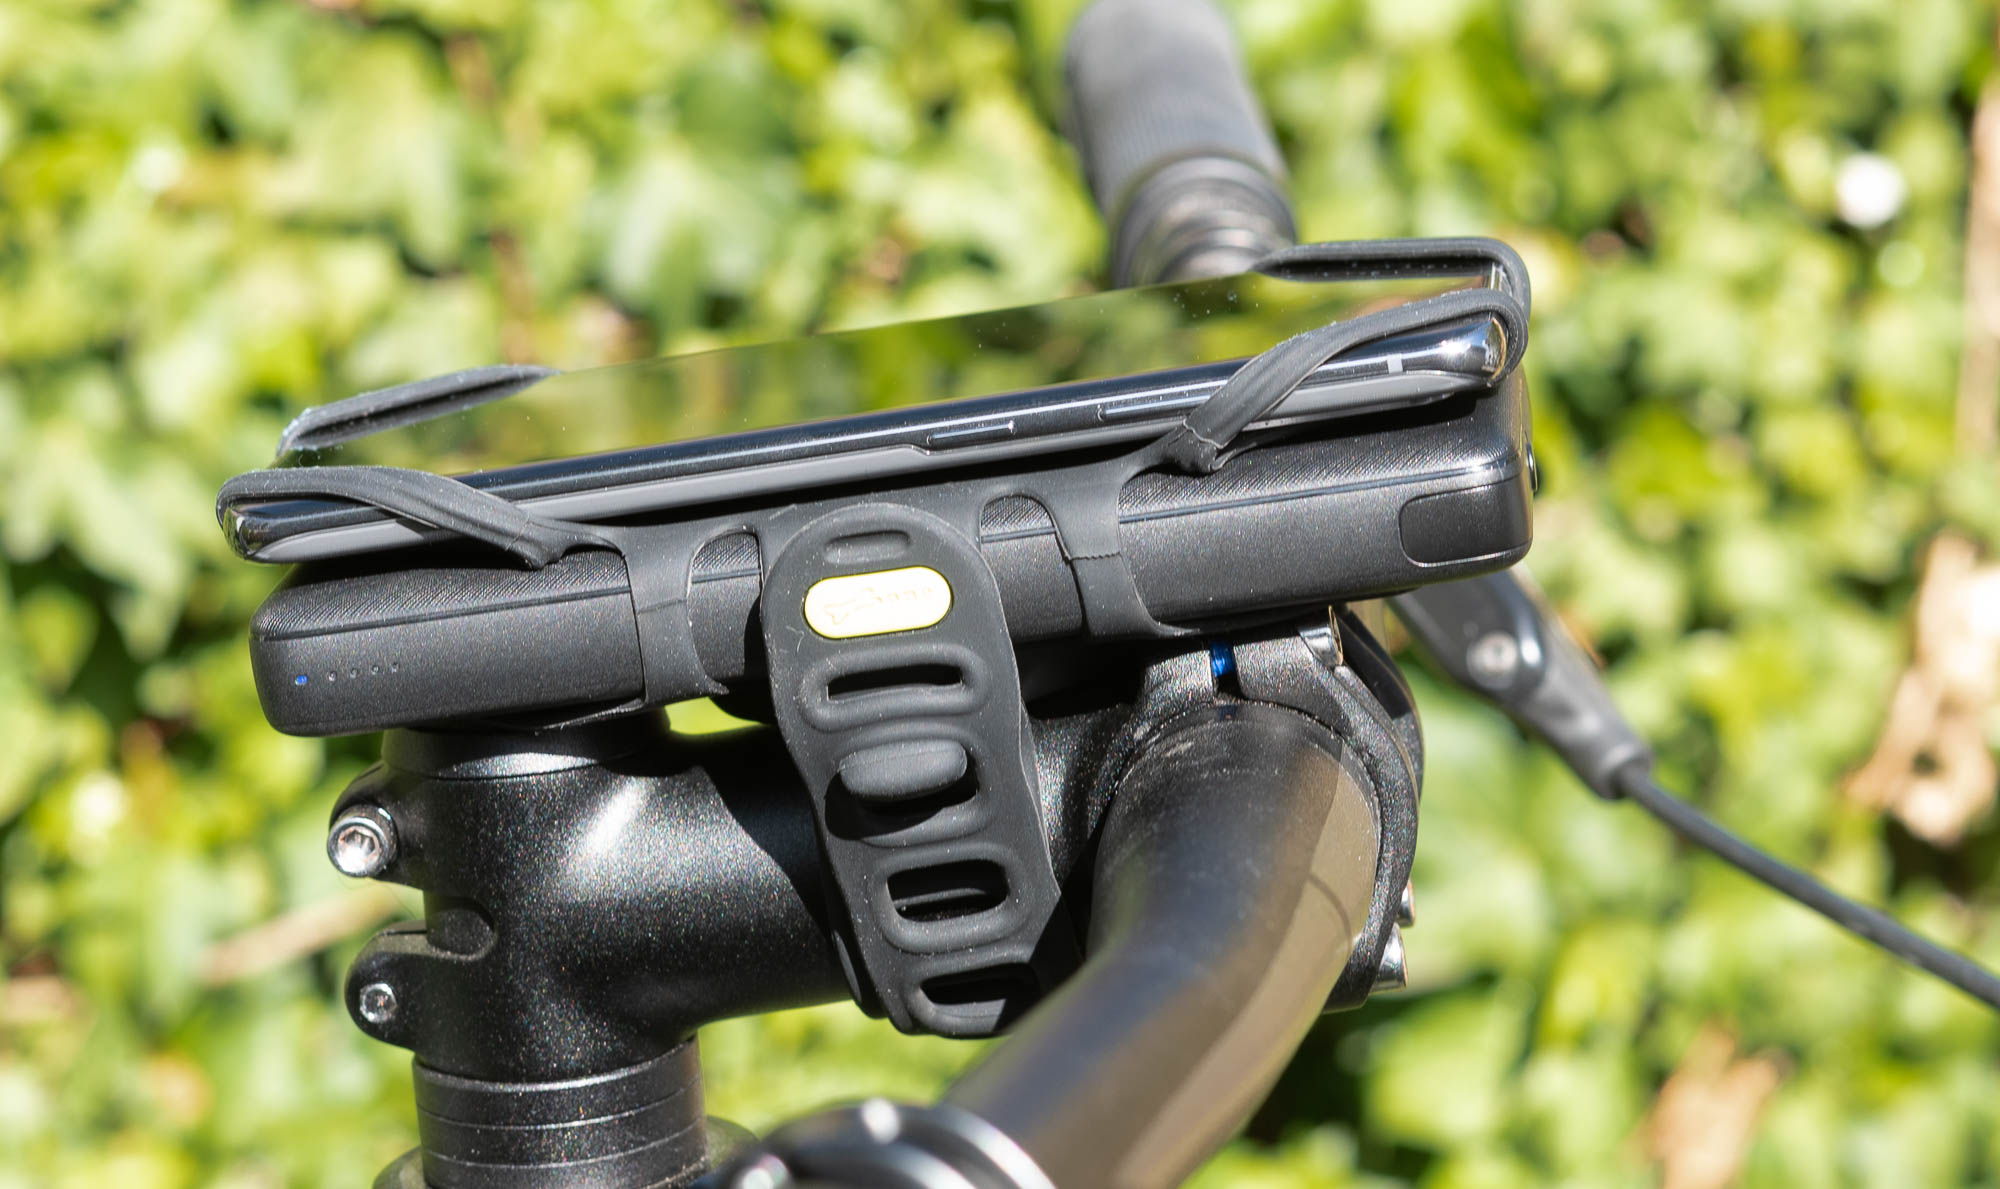 ▷ Bone Fahrrad Handyhalter + Qi-Powerbank im Test ☑️ Stabil & günstig